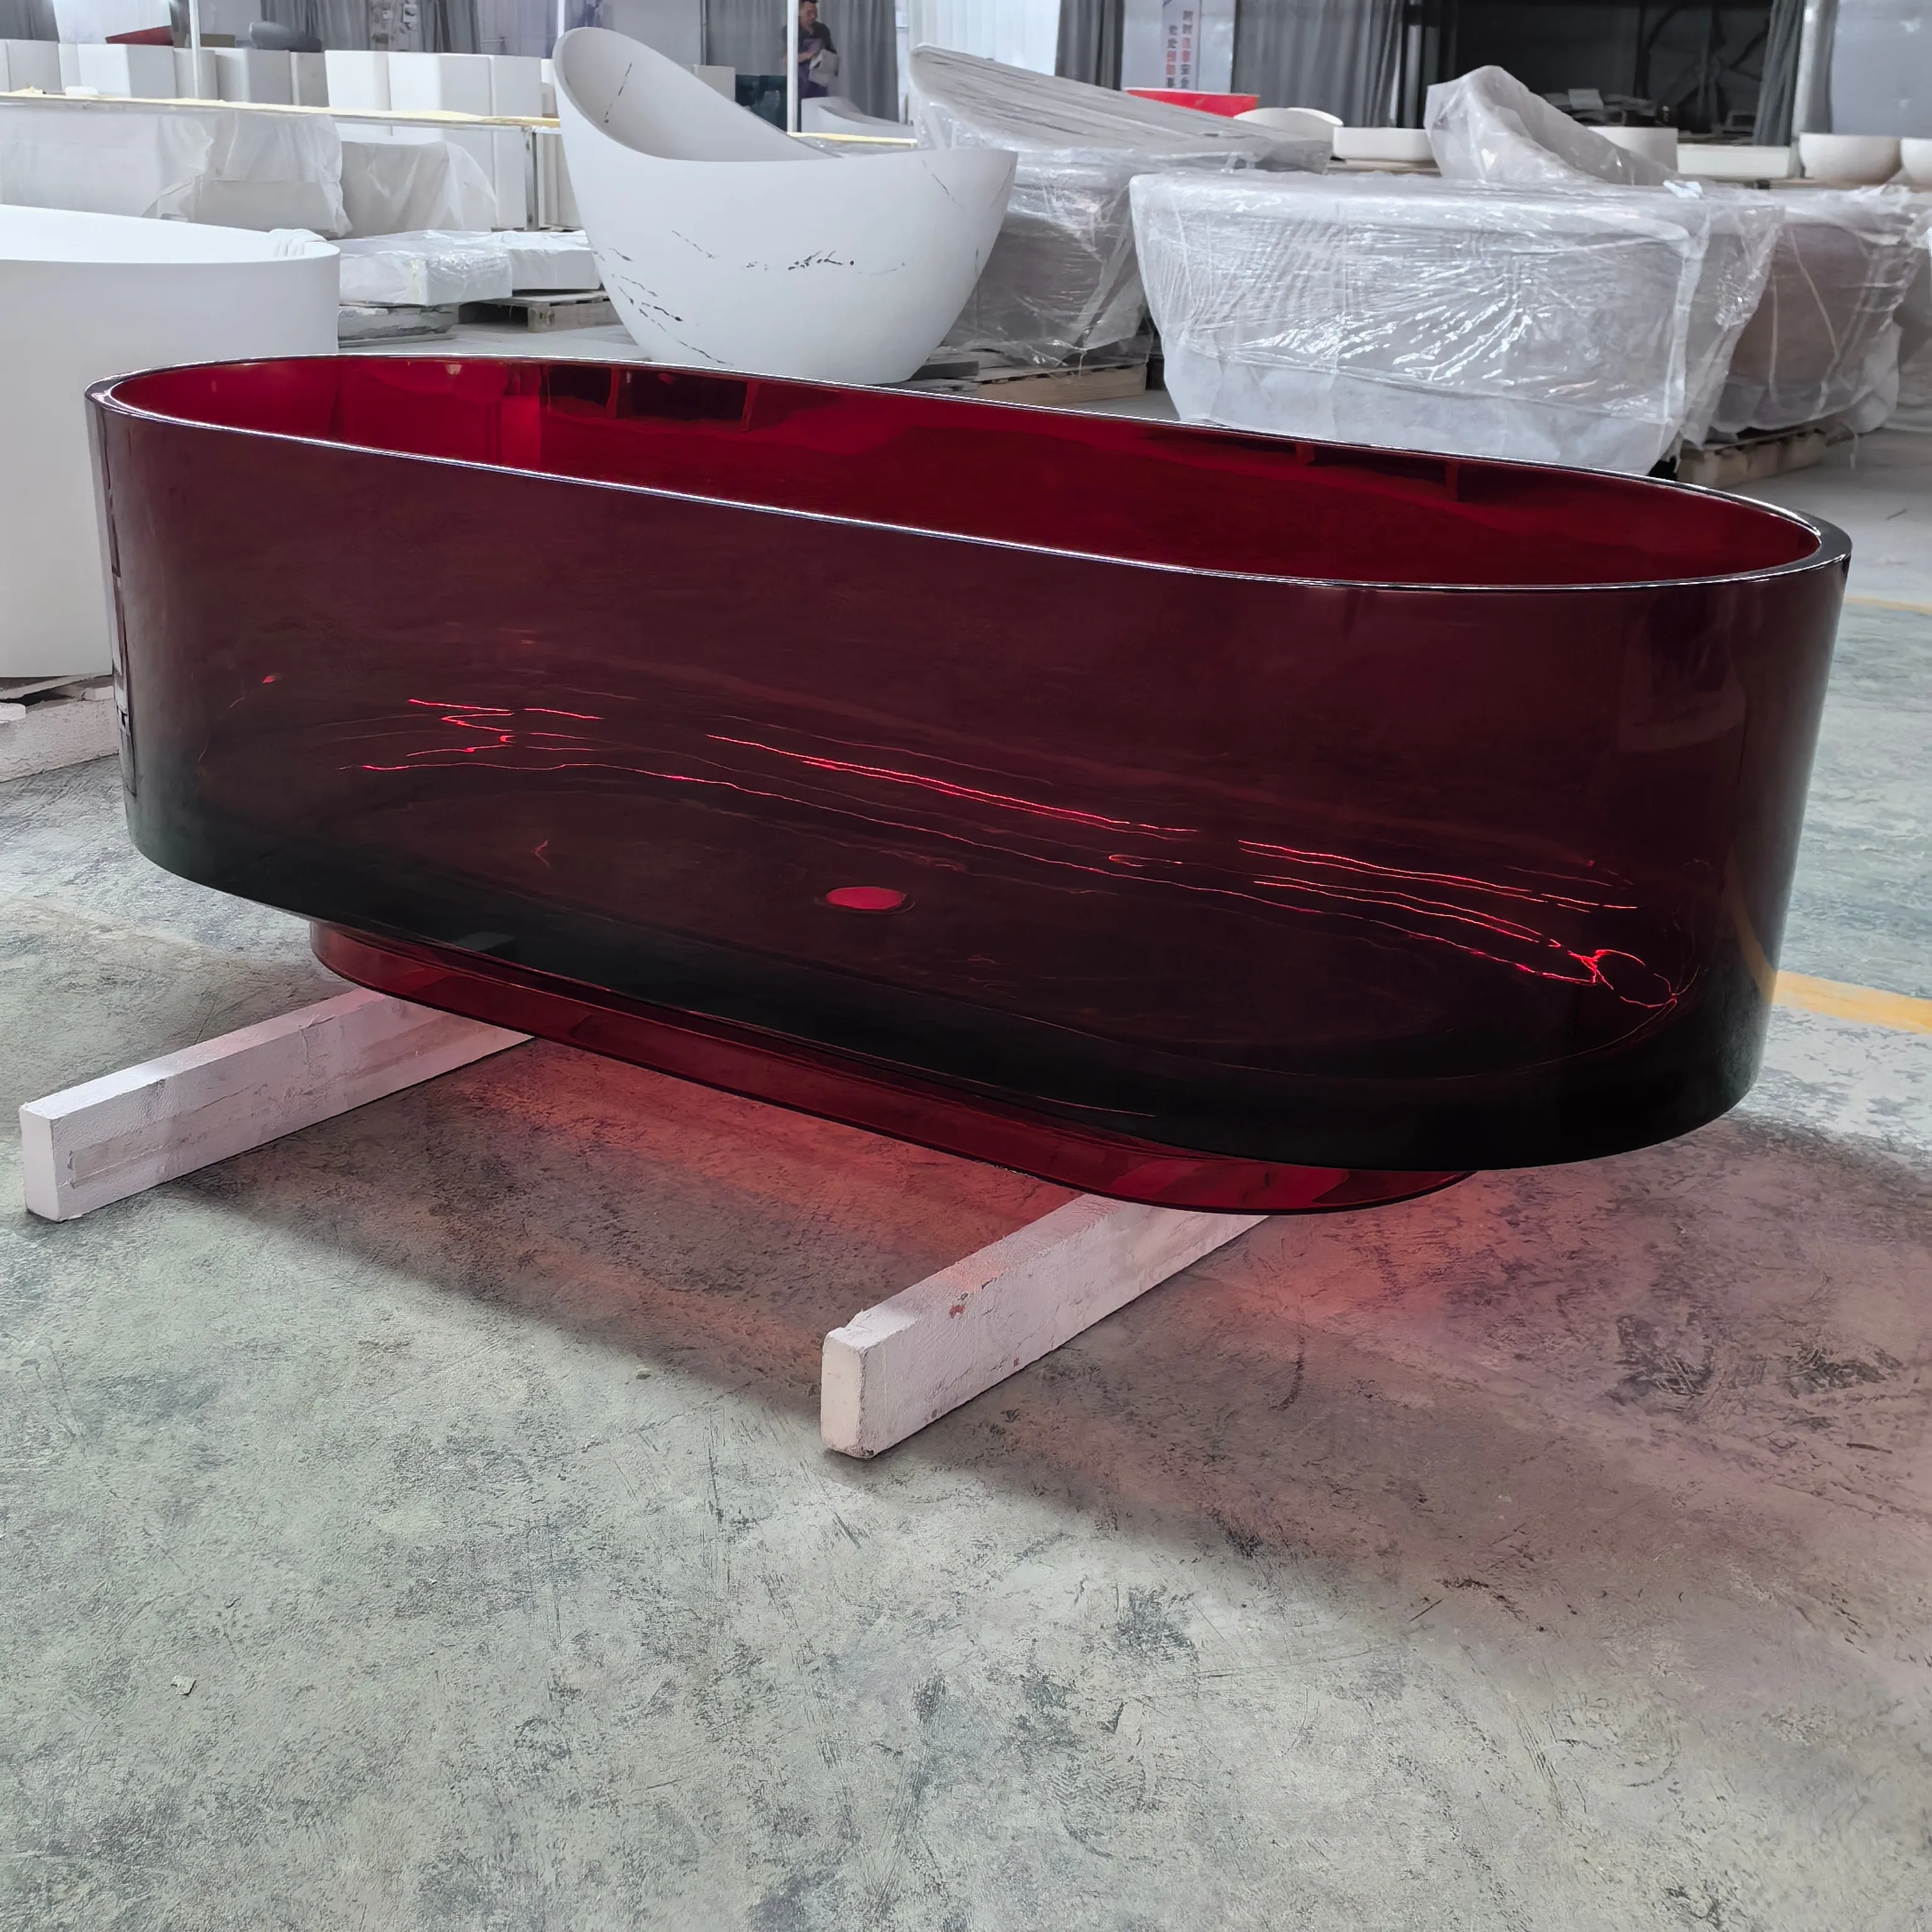 Bañera de resina transparente roja de diseño moderno, bañera de baño de piedra Artificial para Hotel, bañera translúcida, bañera transparente de poliéster